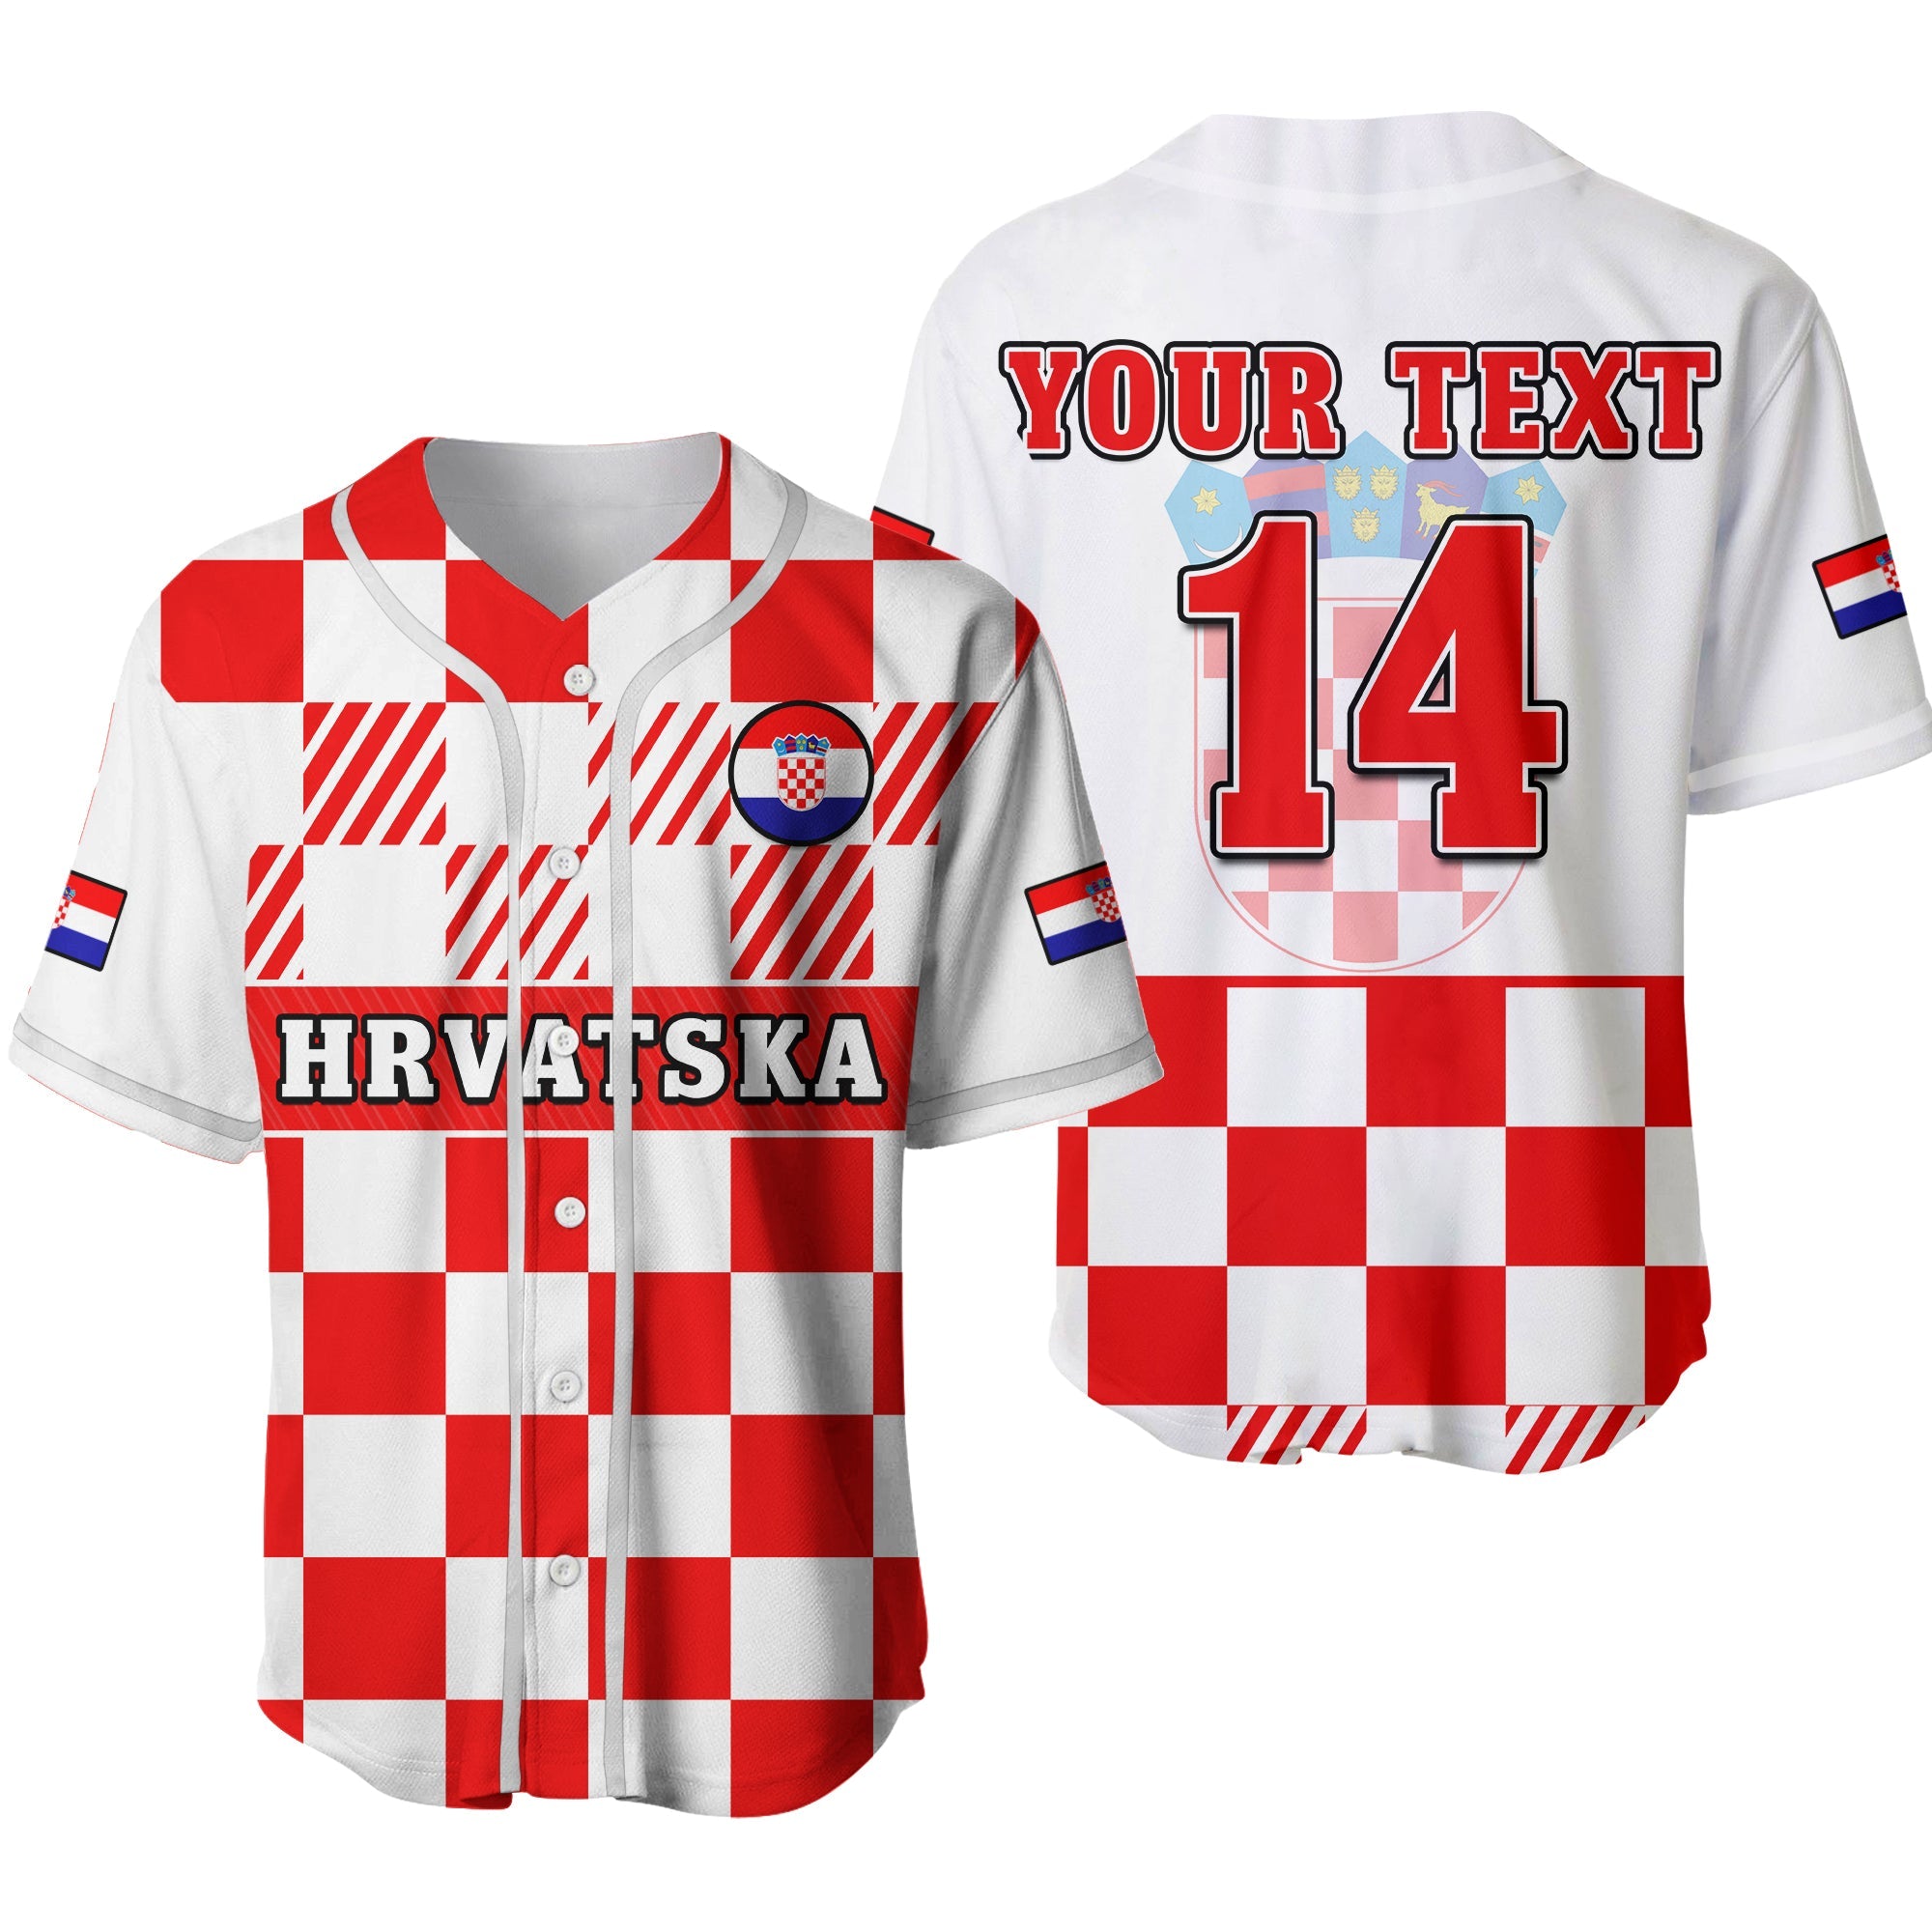 custom-text-and-number-croatia-football-baseball-jersey-hrvatska-checkerboard-red-version-ver02